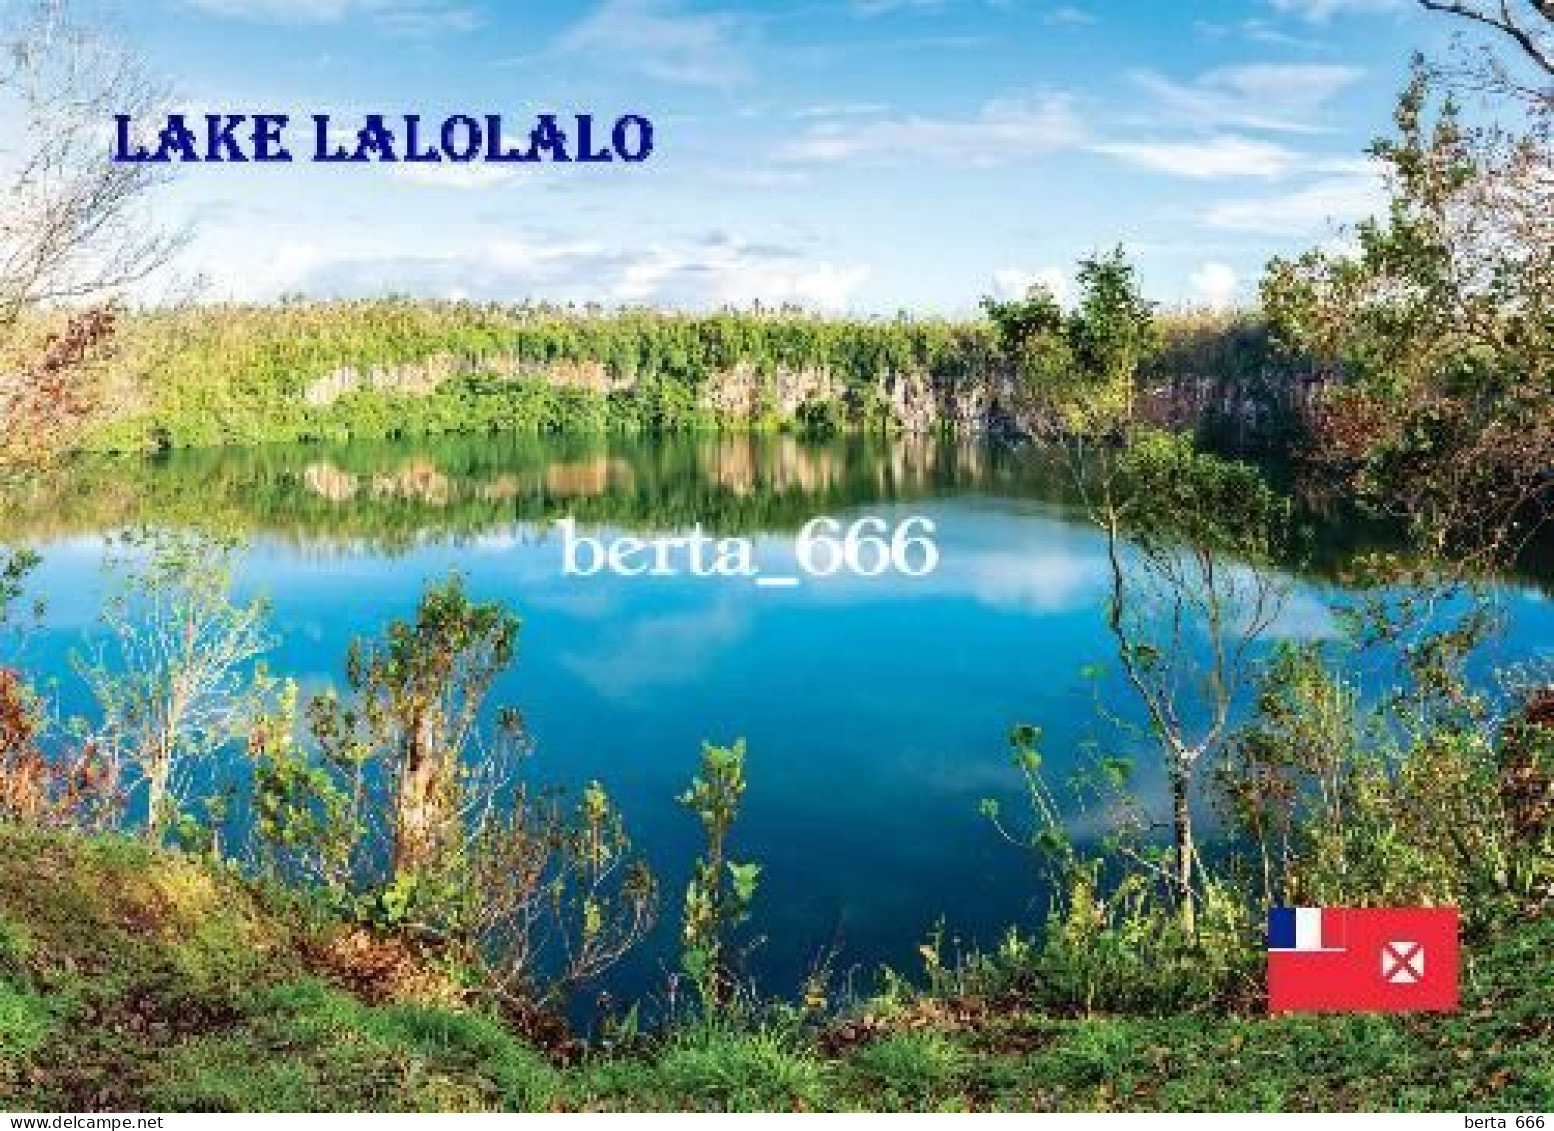 Wallis And Futuna Lake Lalolalo New Postcard - Wallis And Futuna